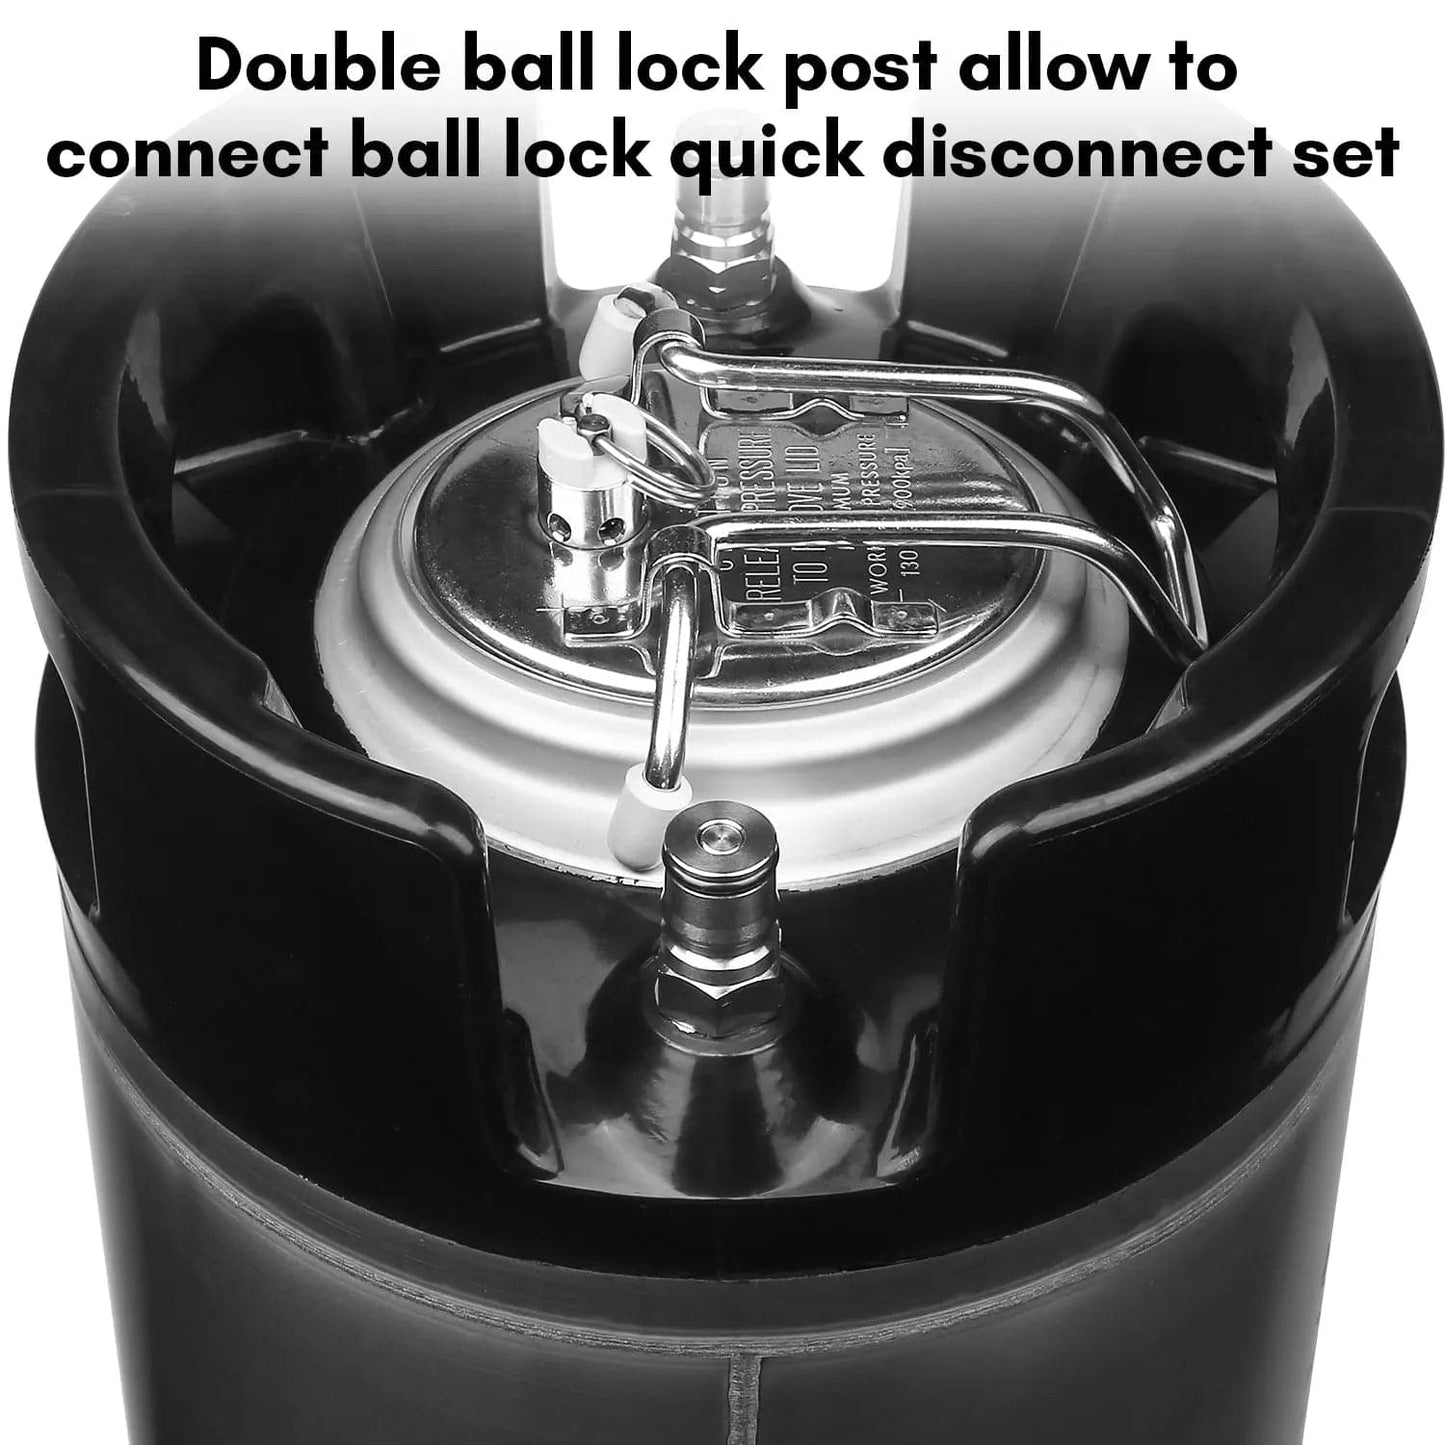 tmcraft 5 gallon ball lock keg products details 1